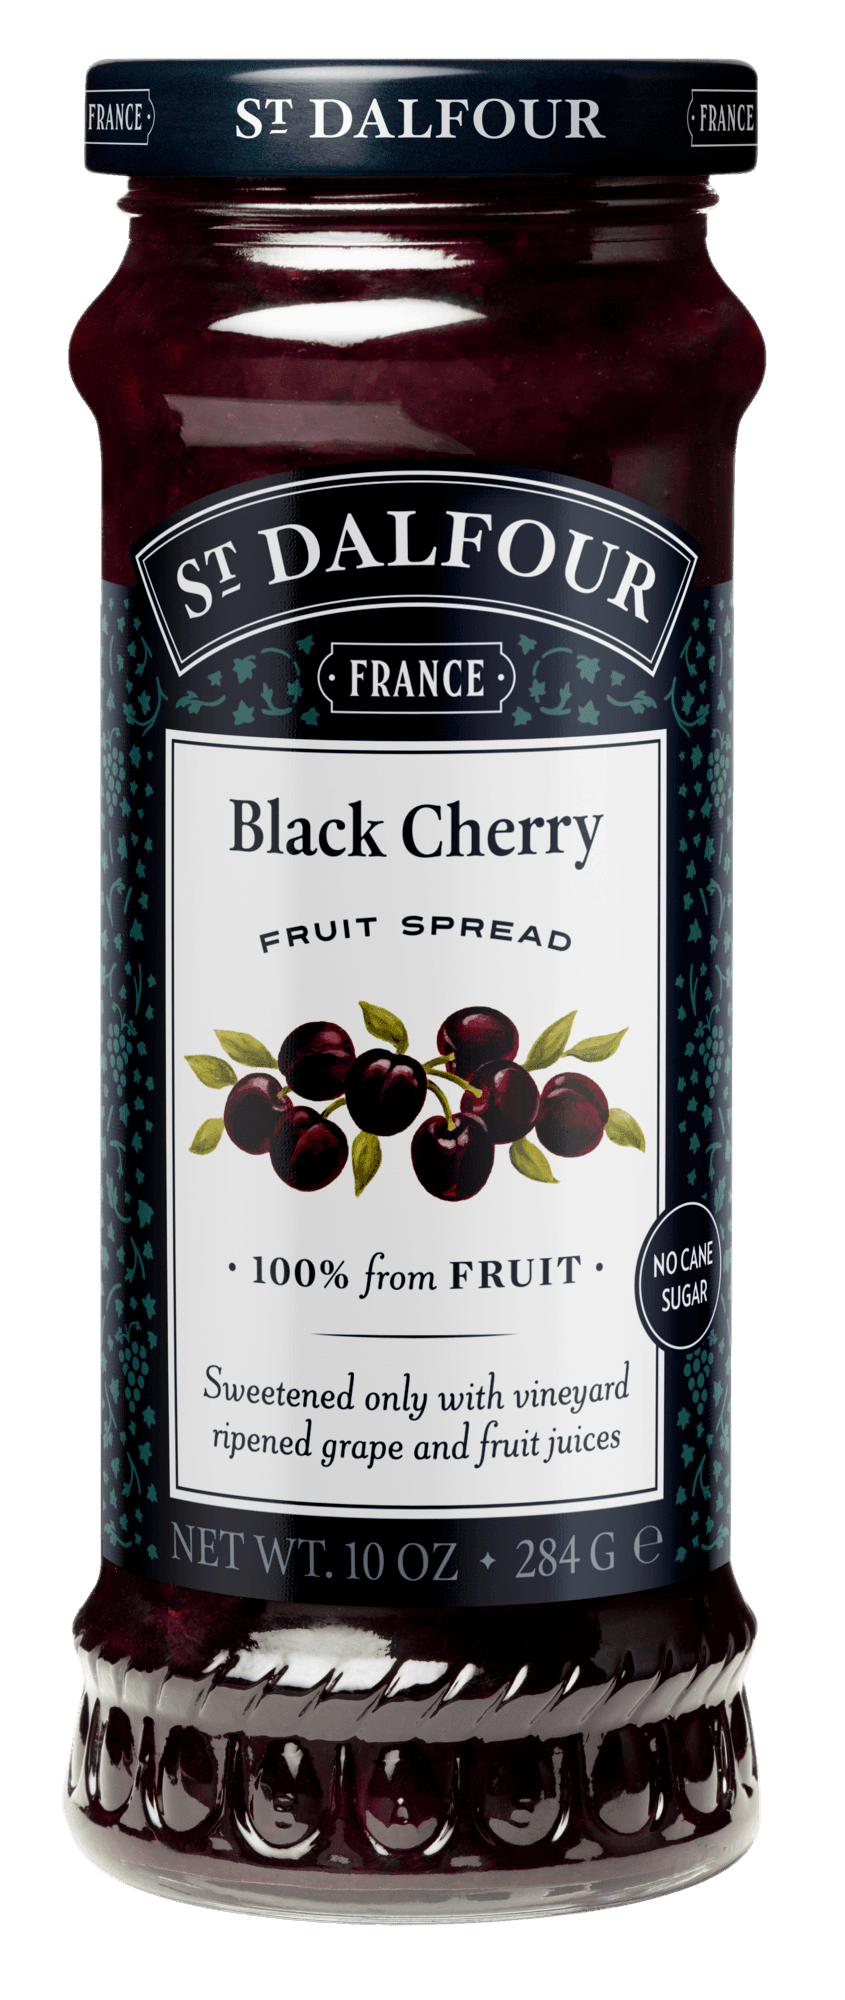 A bottle of St. Dalfour's Black Cherry fruit spread